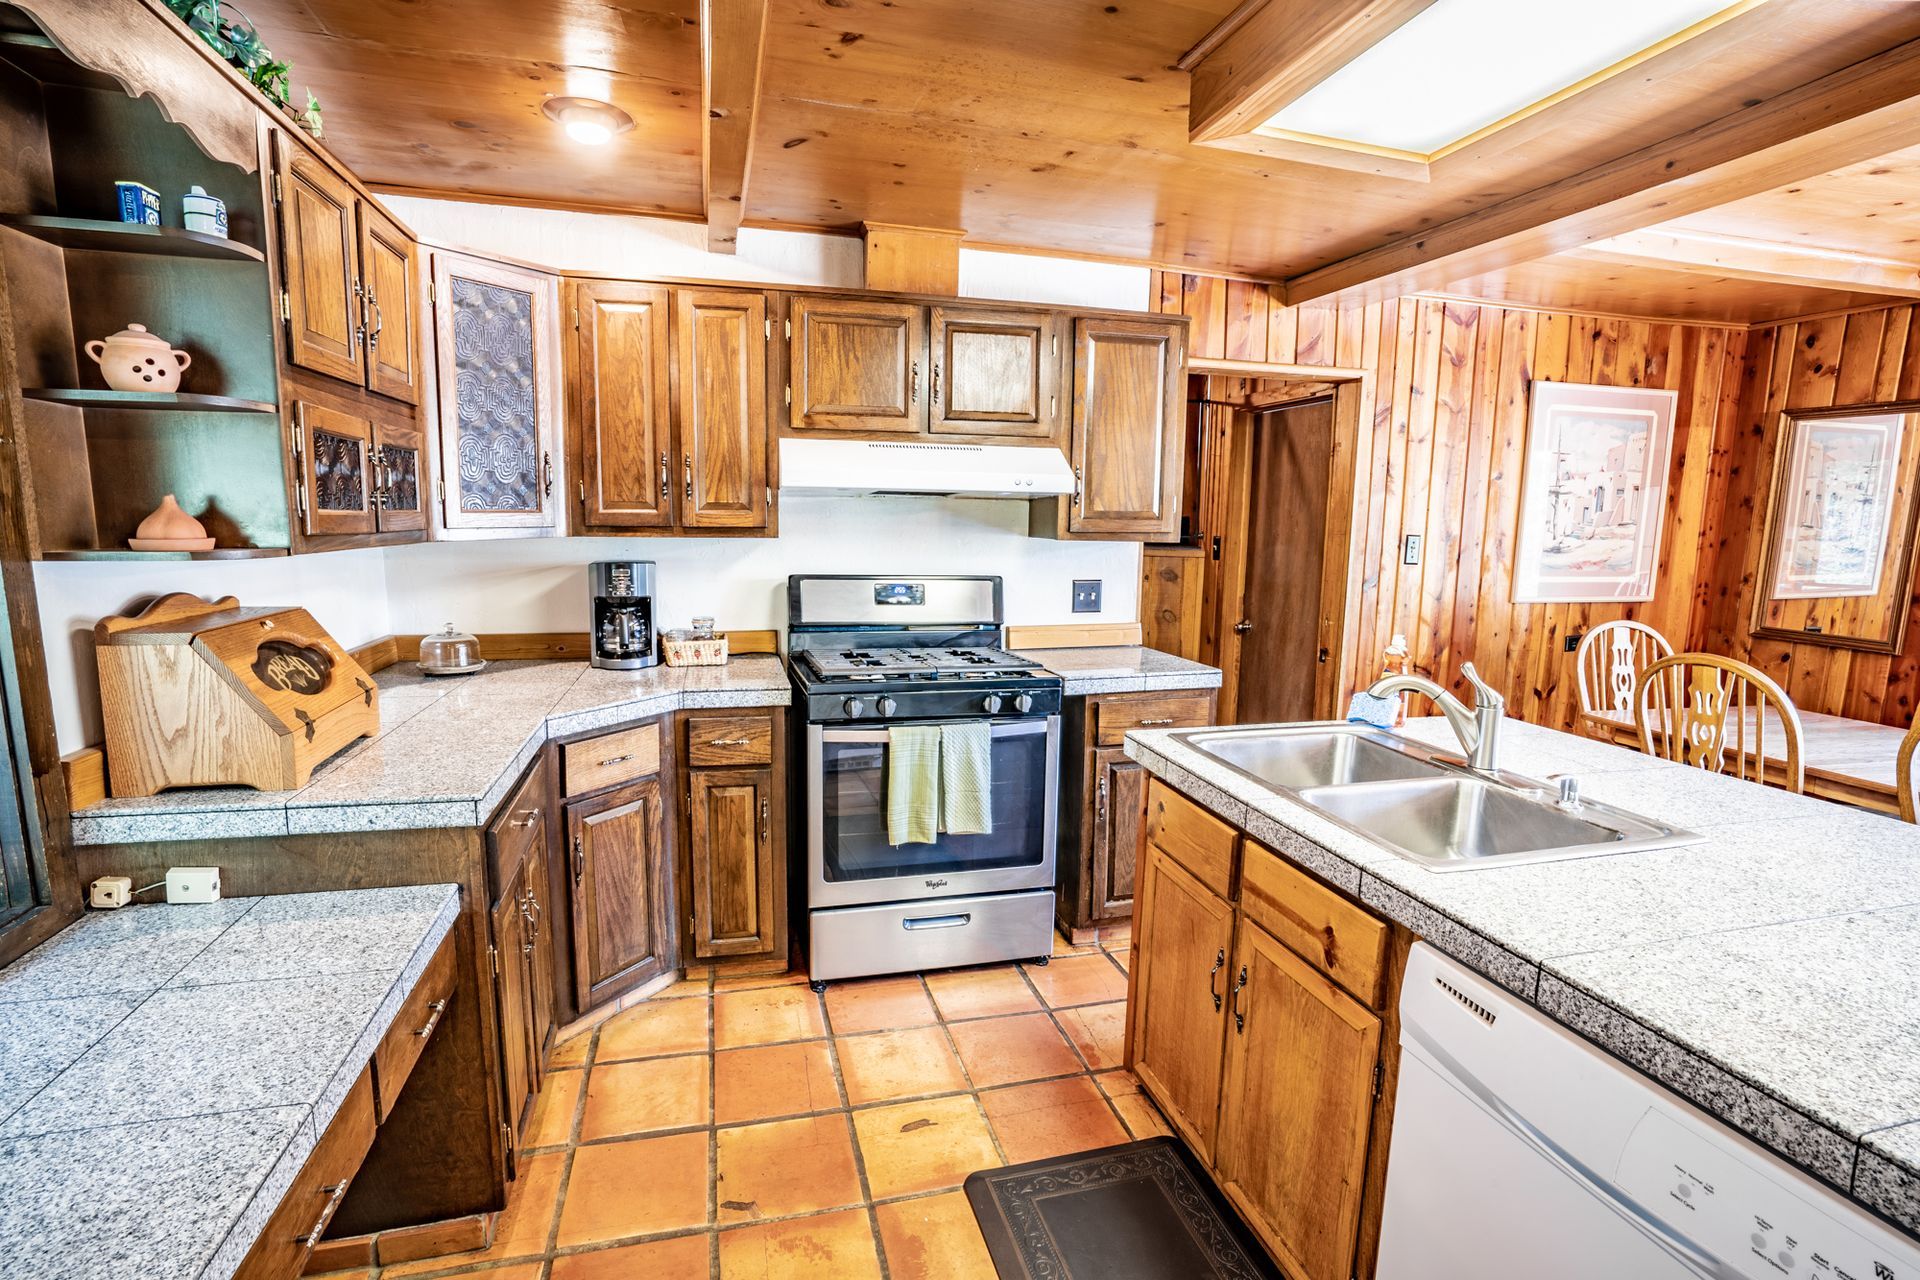 7. Colorado Bear Creek Mountain Home Cabin Kitchen (3) 7e940f7d 1920w 